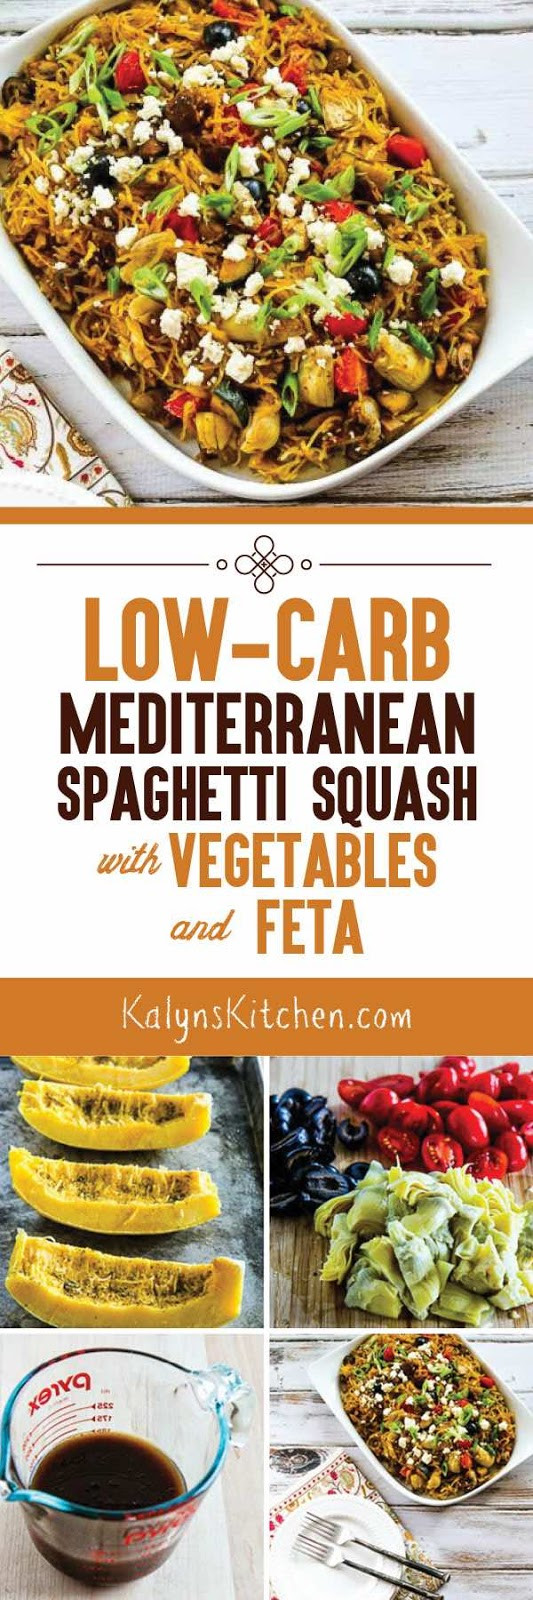 Low Carb Mediterranean Diet
 Low Carb Mediterranean Spaghetti Squash Sauteed with